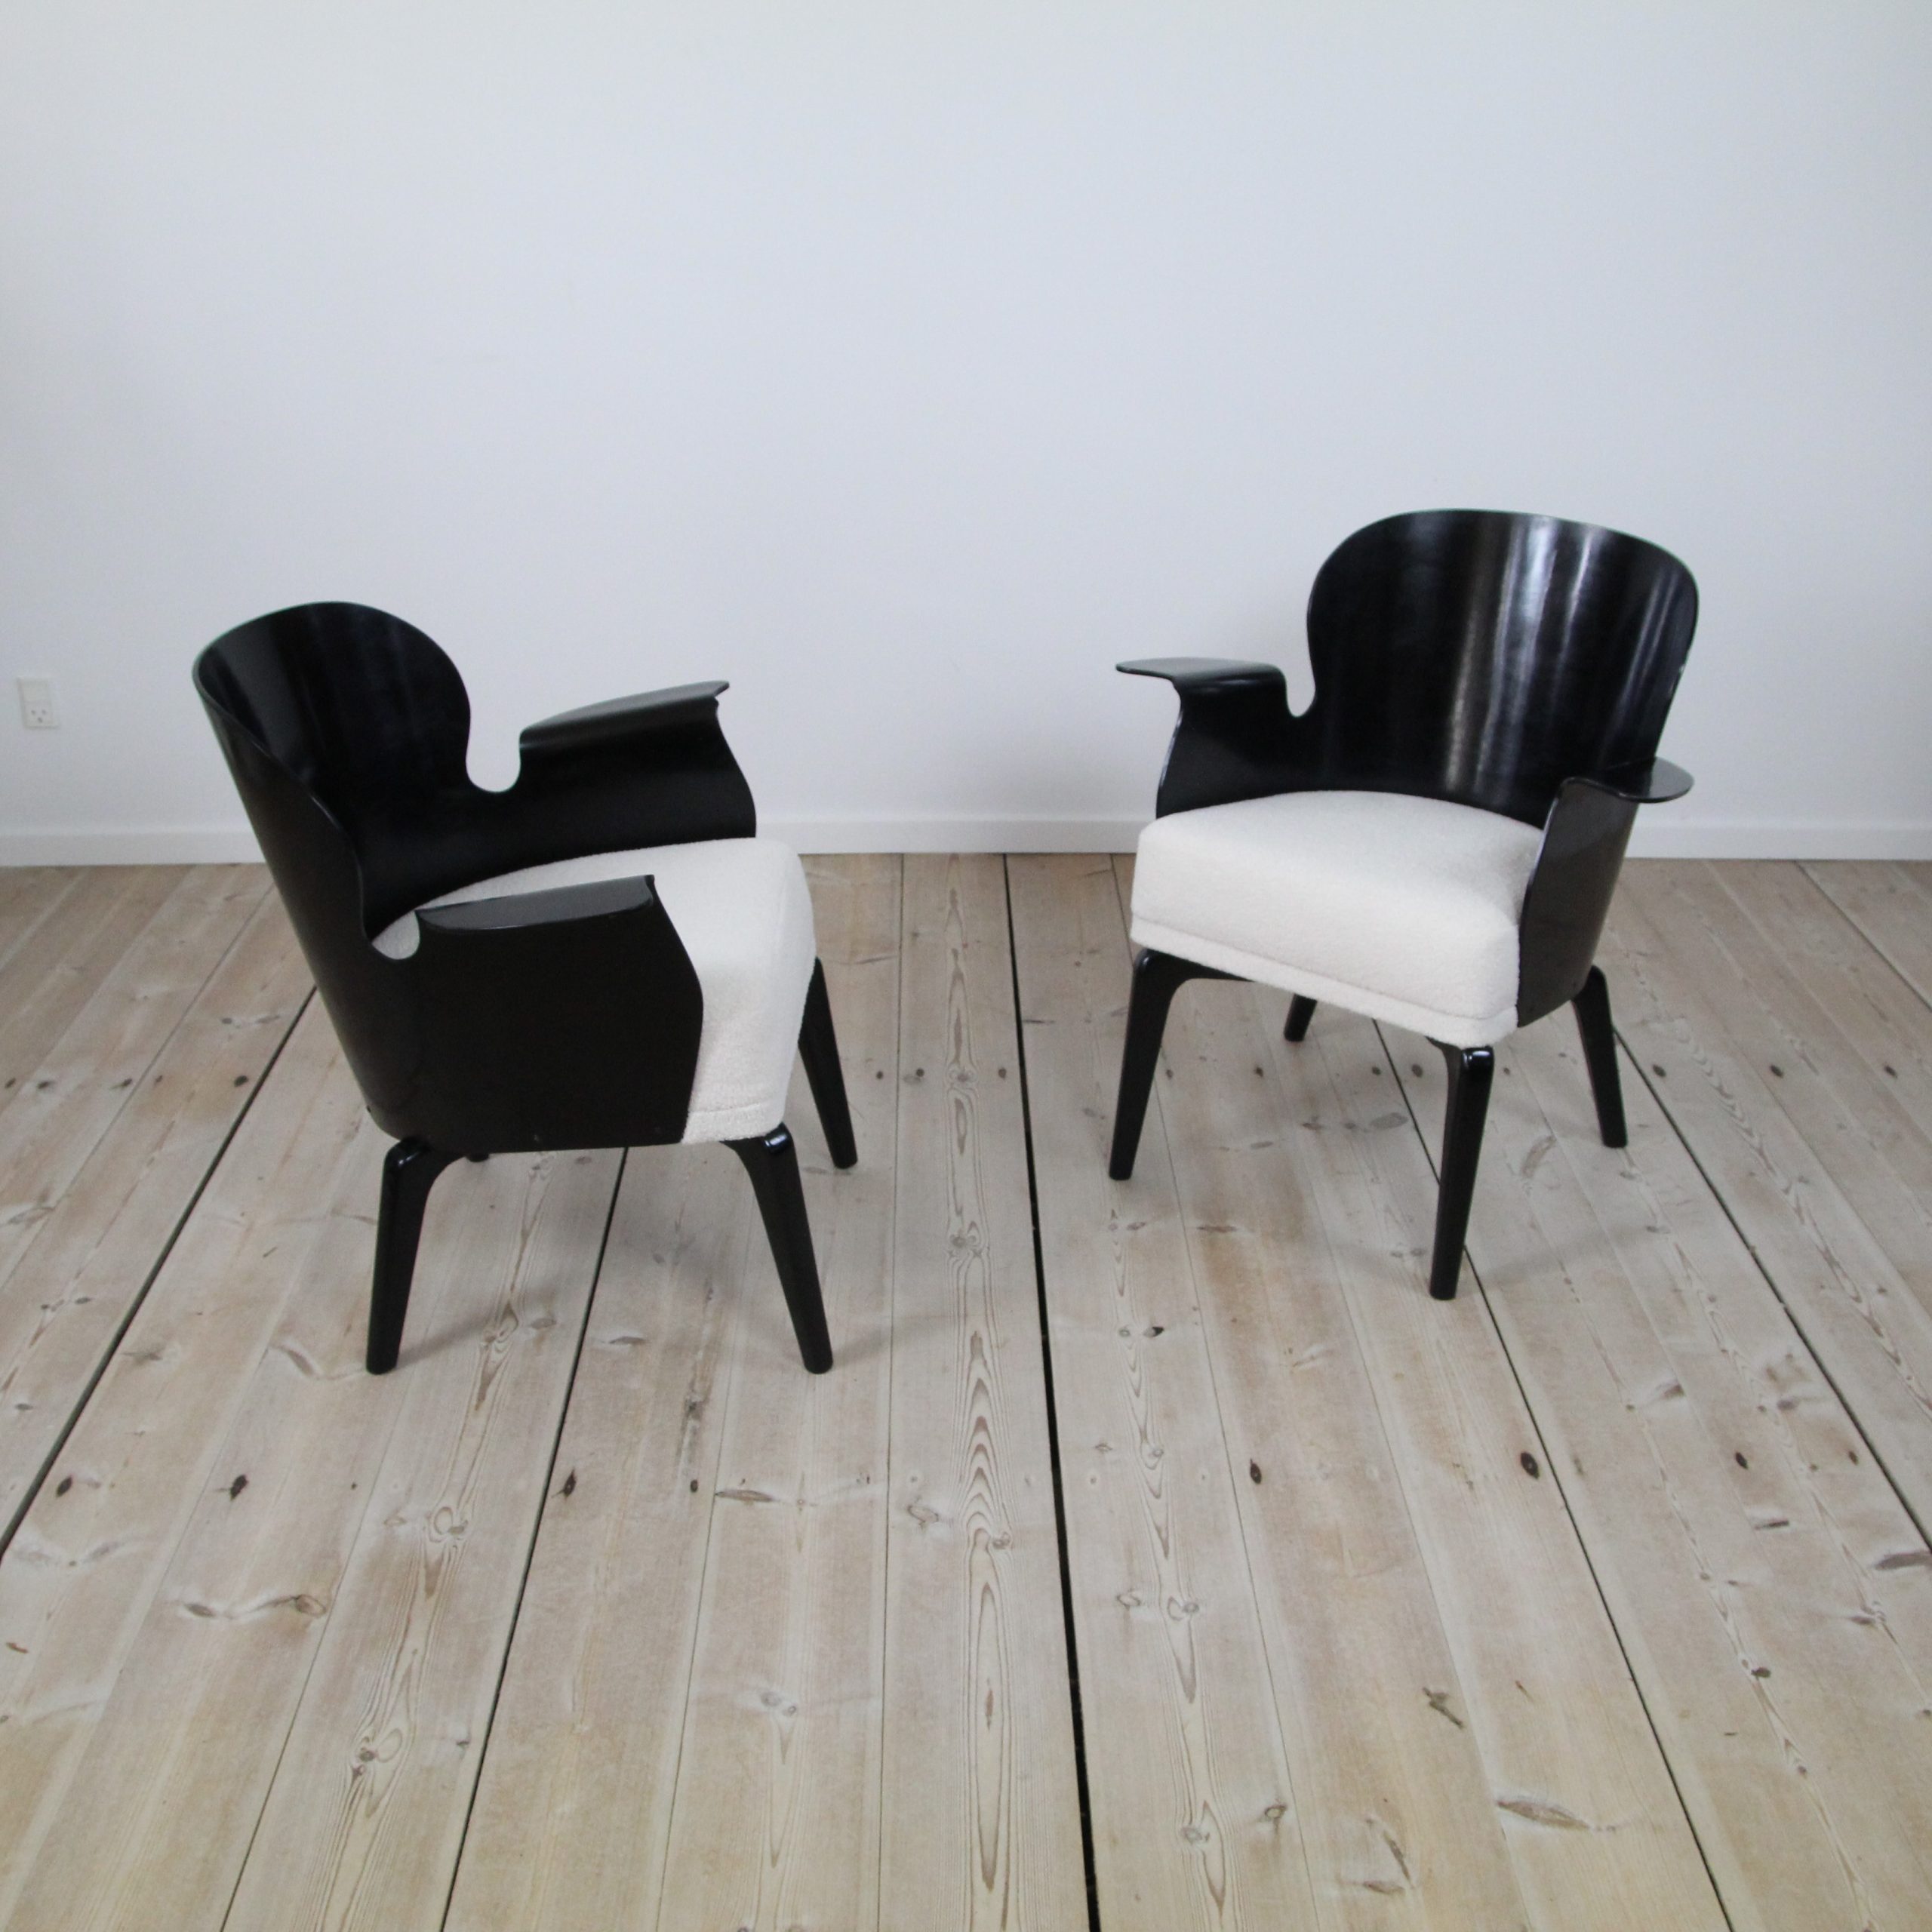 Pair of ebonised Hans Olsen chairs, Danish 1950’s